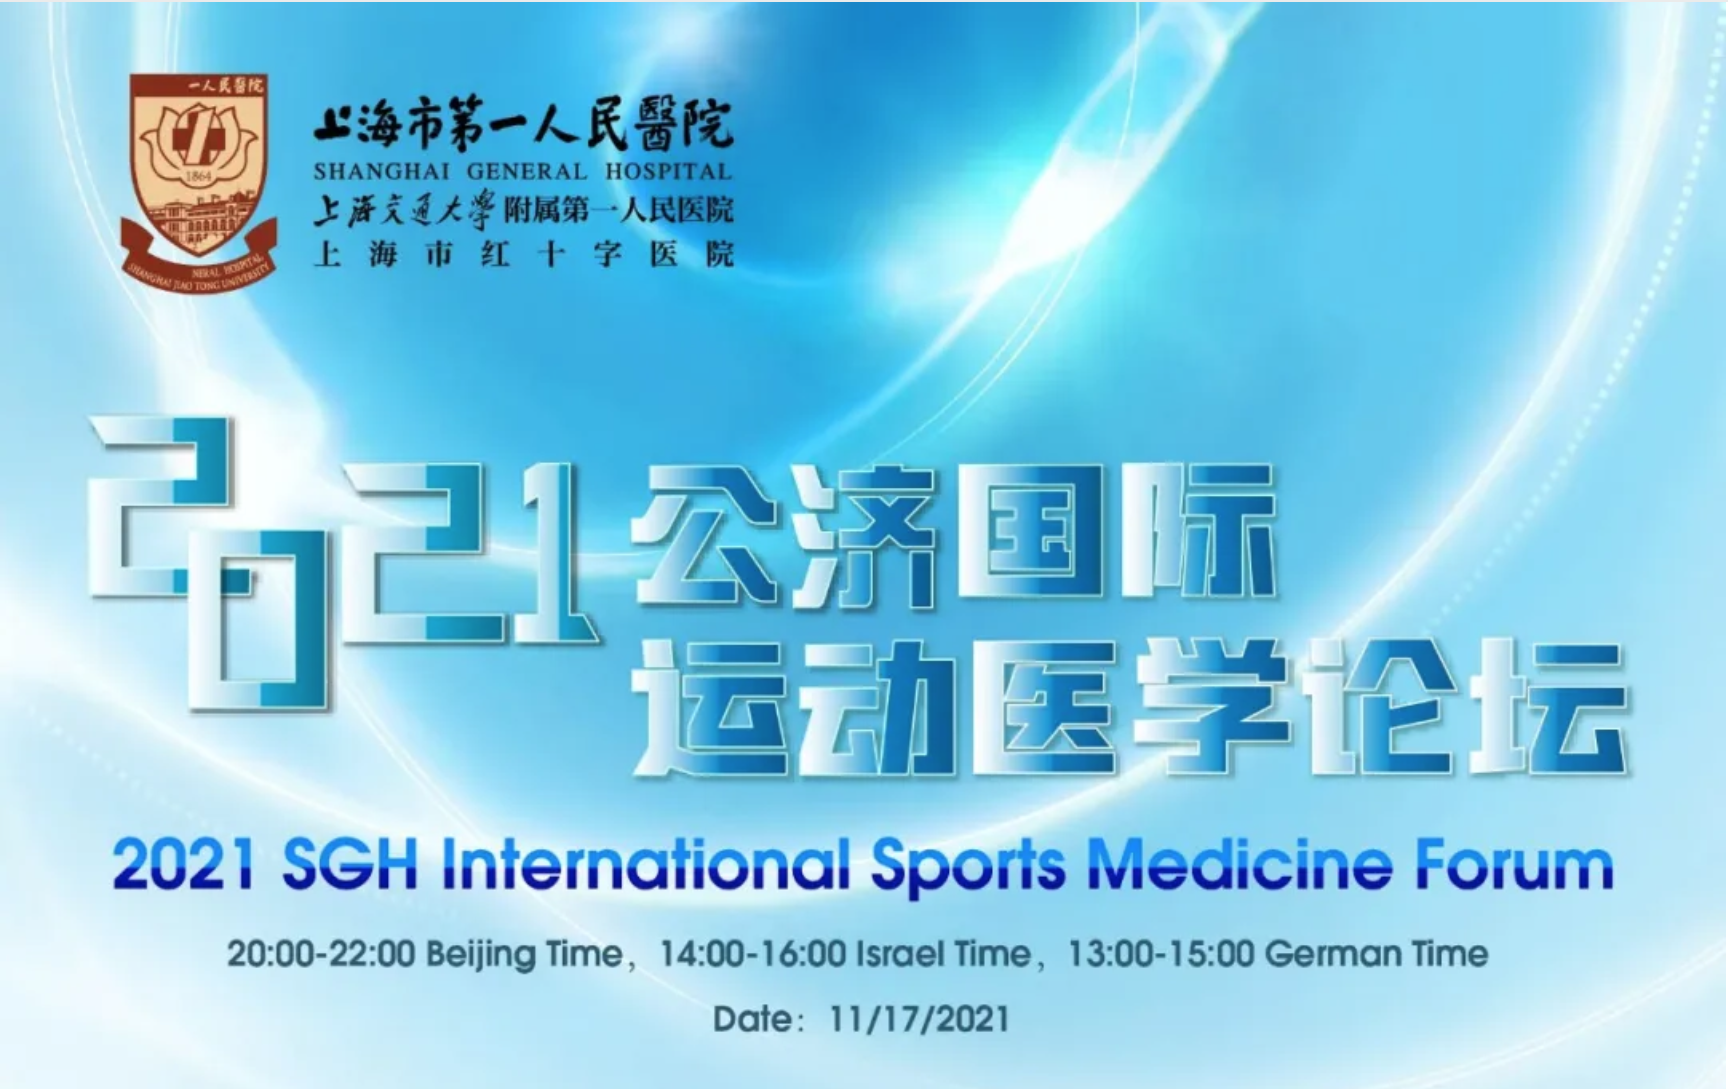 2021 SGH International Sports Medicine Forum